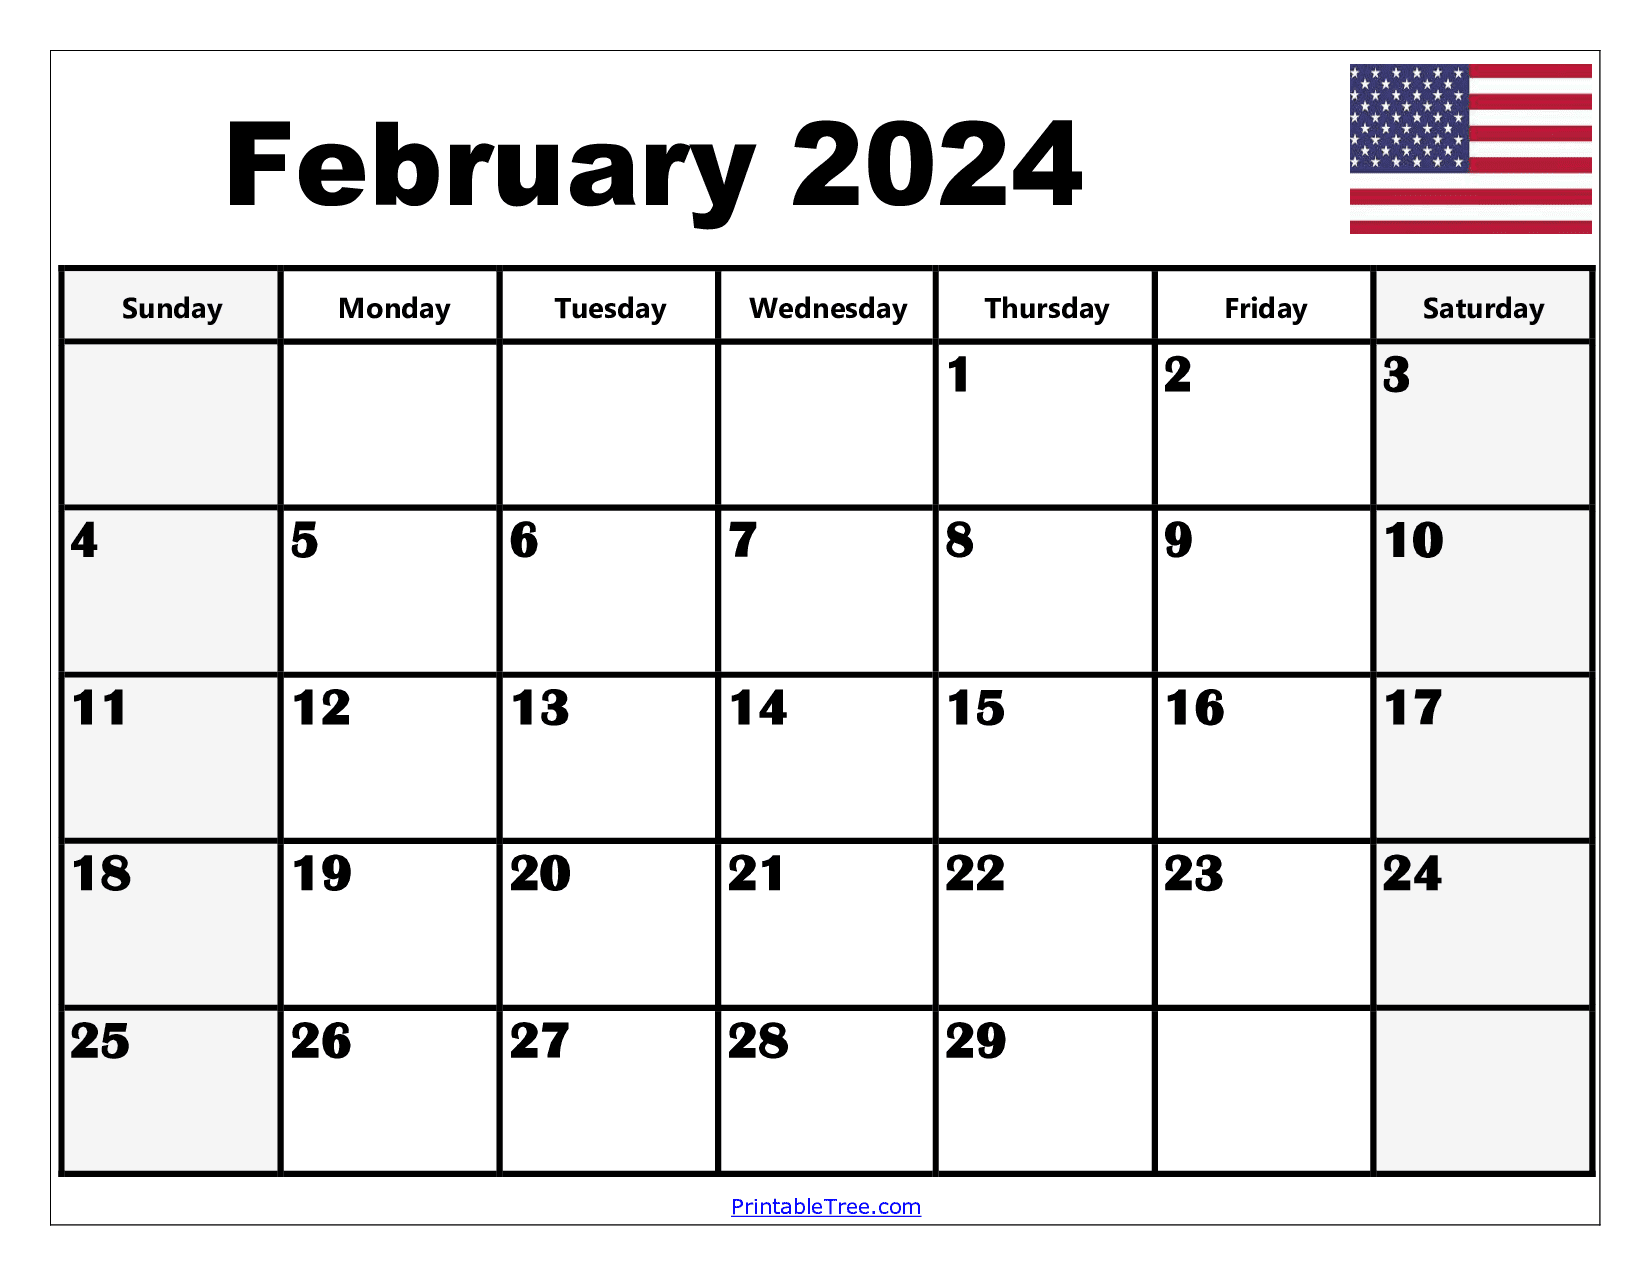 February 2024 Calendar Printable Pdf Template With Holidays for Free Printable Calendar February 2024 With Holidays